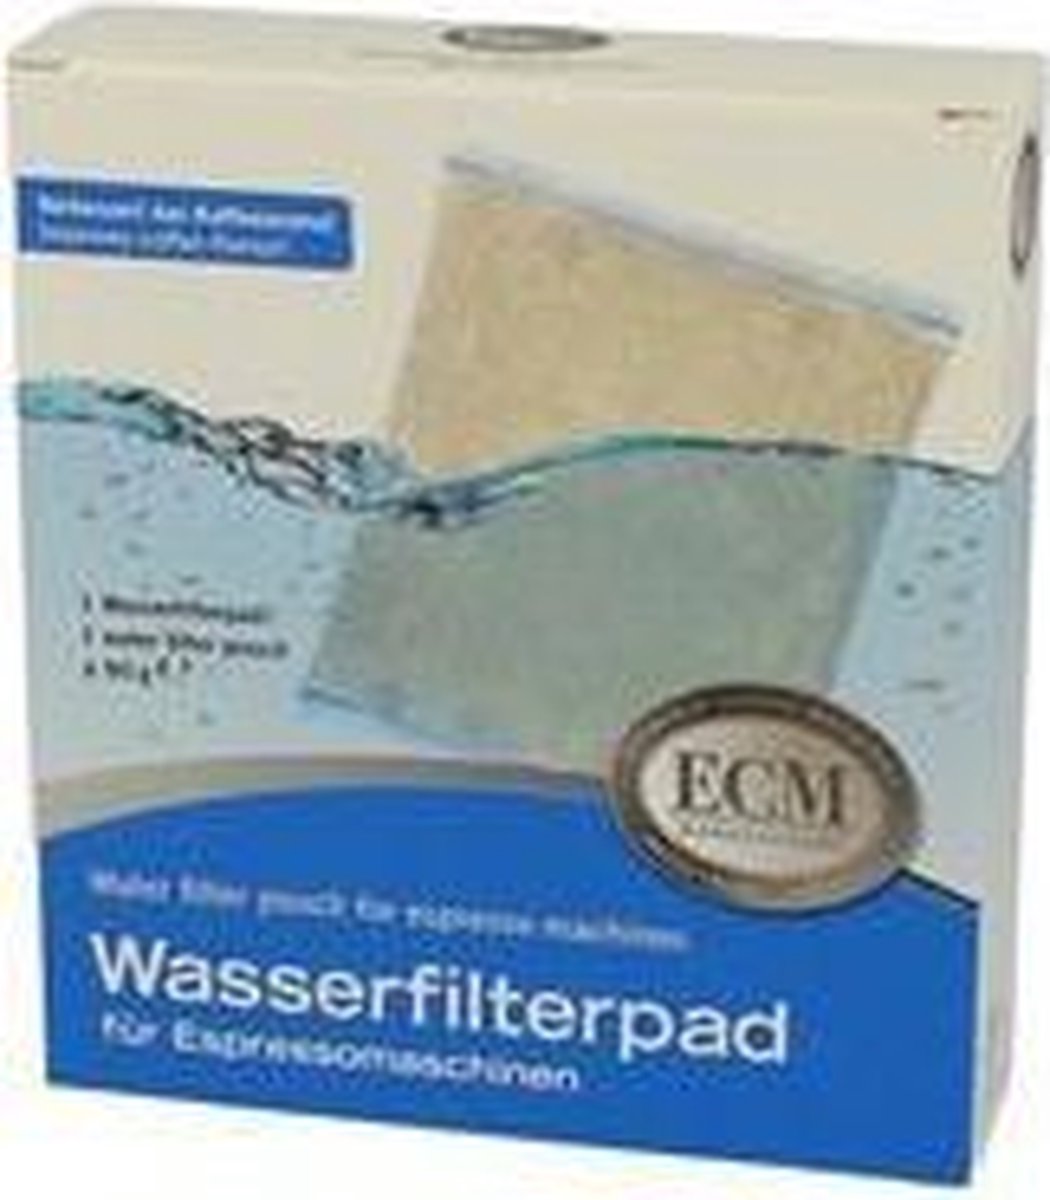 Waterfilter sachet